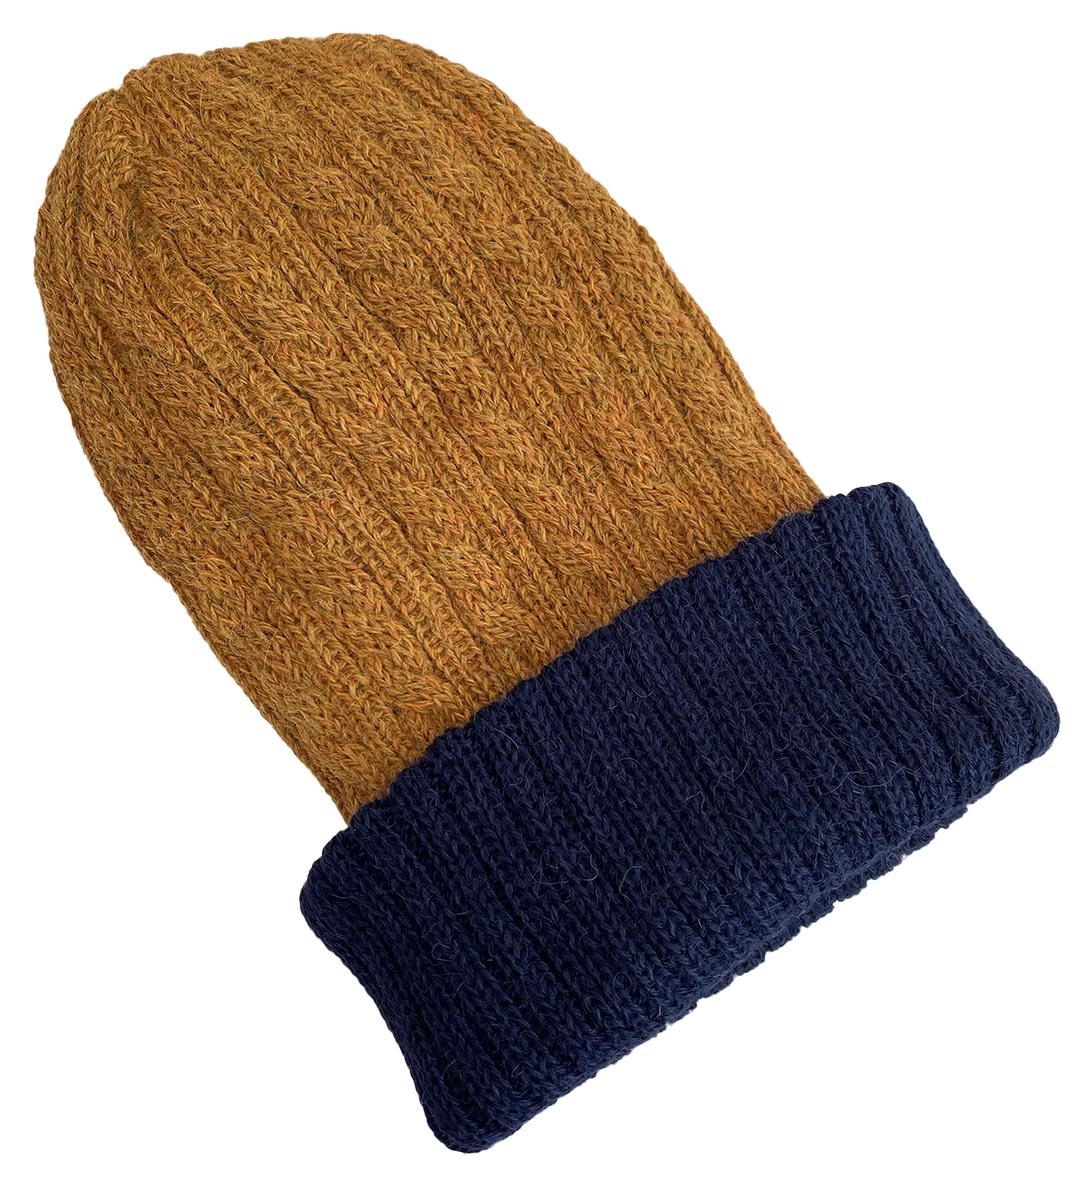 Reversible Hand Knit Alpaca Beanie - Navy/Mustard - 1